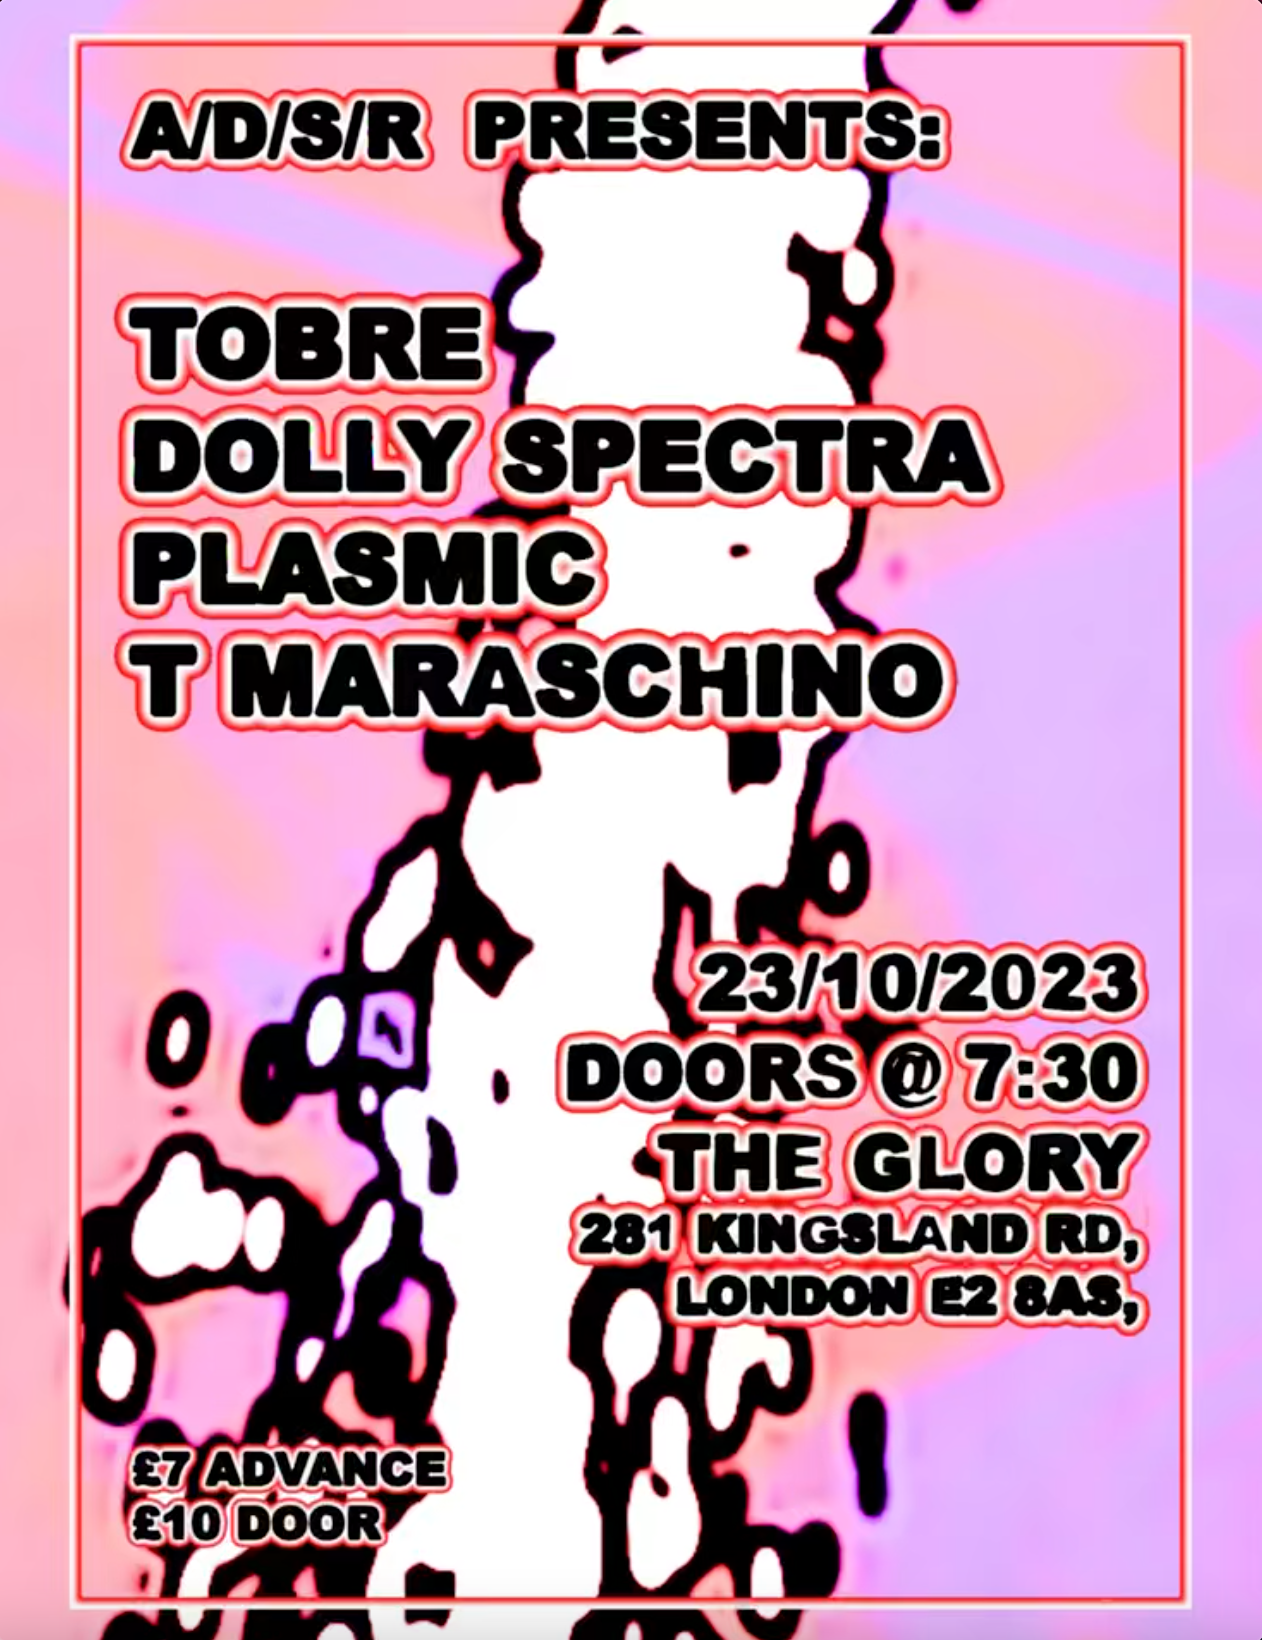 MUSIC: Tobre, Dolly Spectra, Plasmic, T Maraschino at The Glory